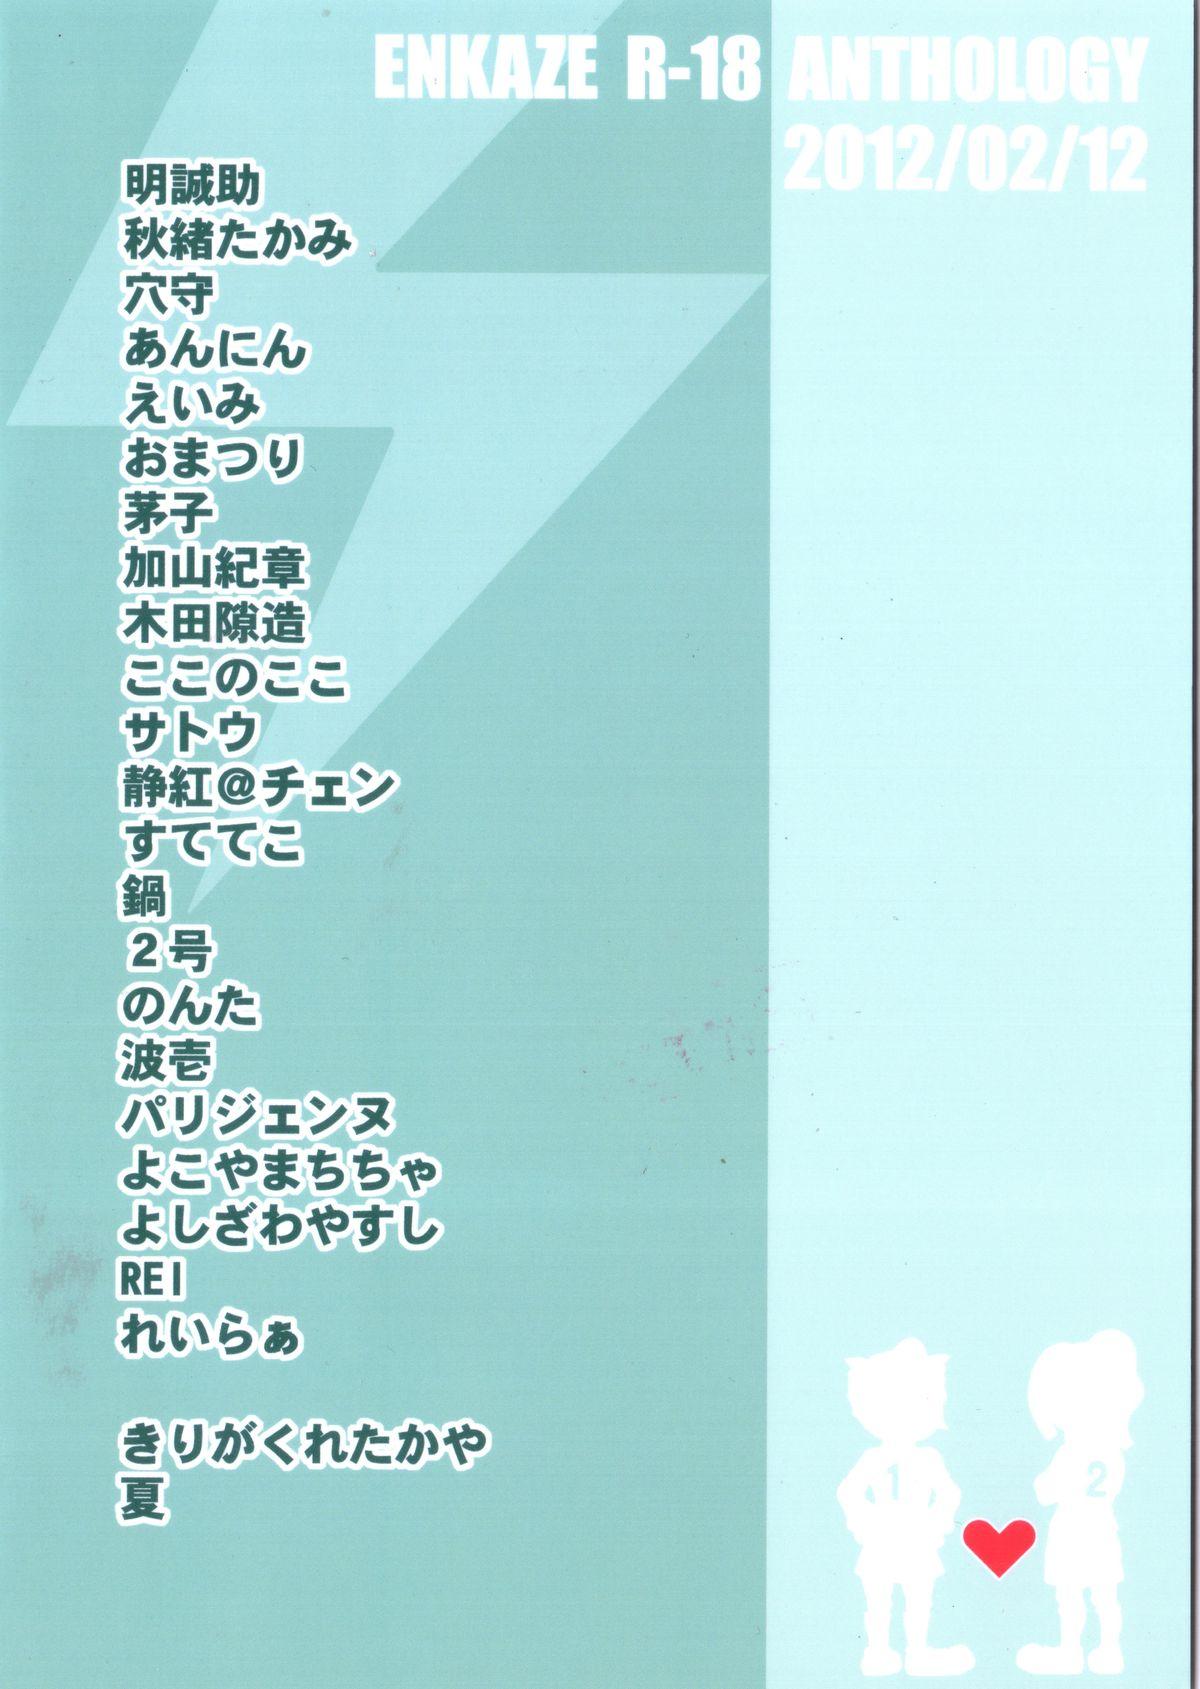 Natural Kirigakure Takaya (Aniki Otokodou) - ×××× Yarouze! (Inazuma Eleven) - Inazuma eleven Amazing - Page 2